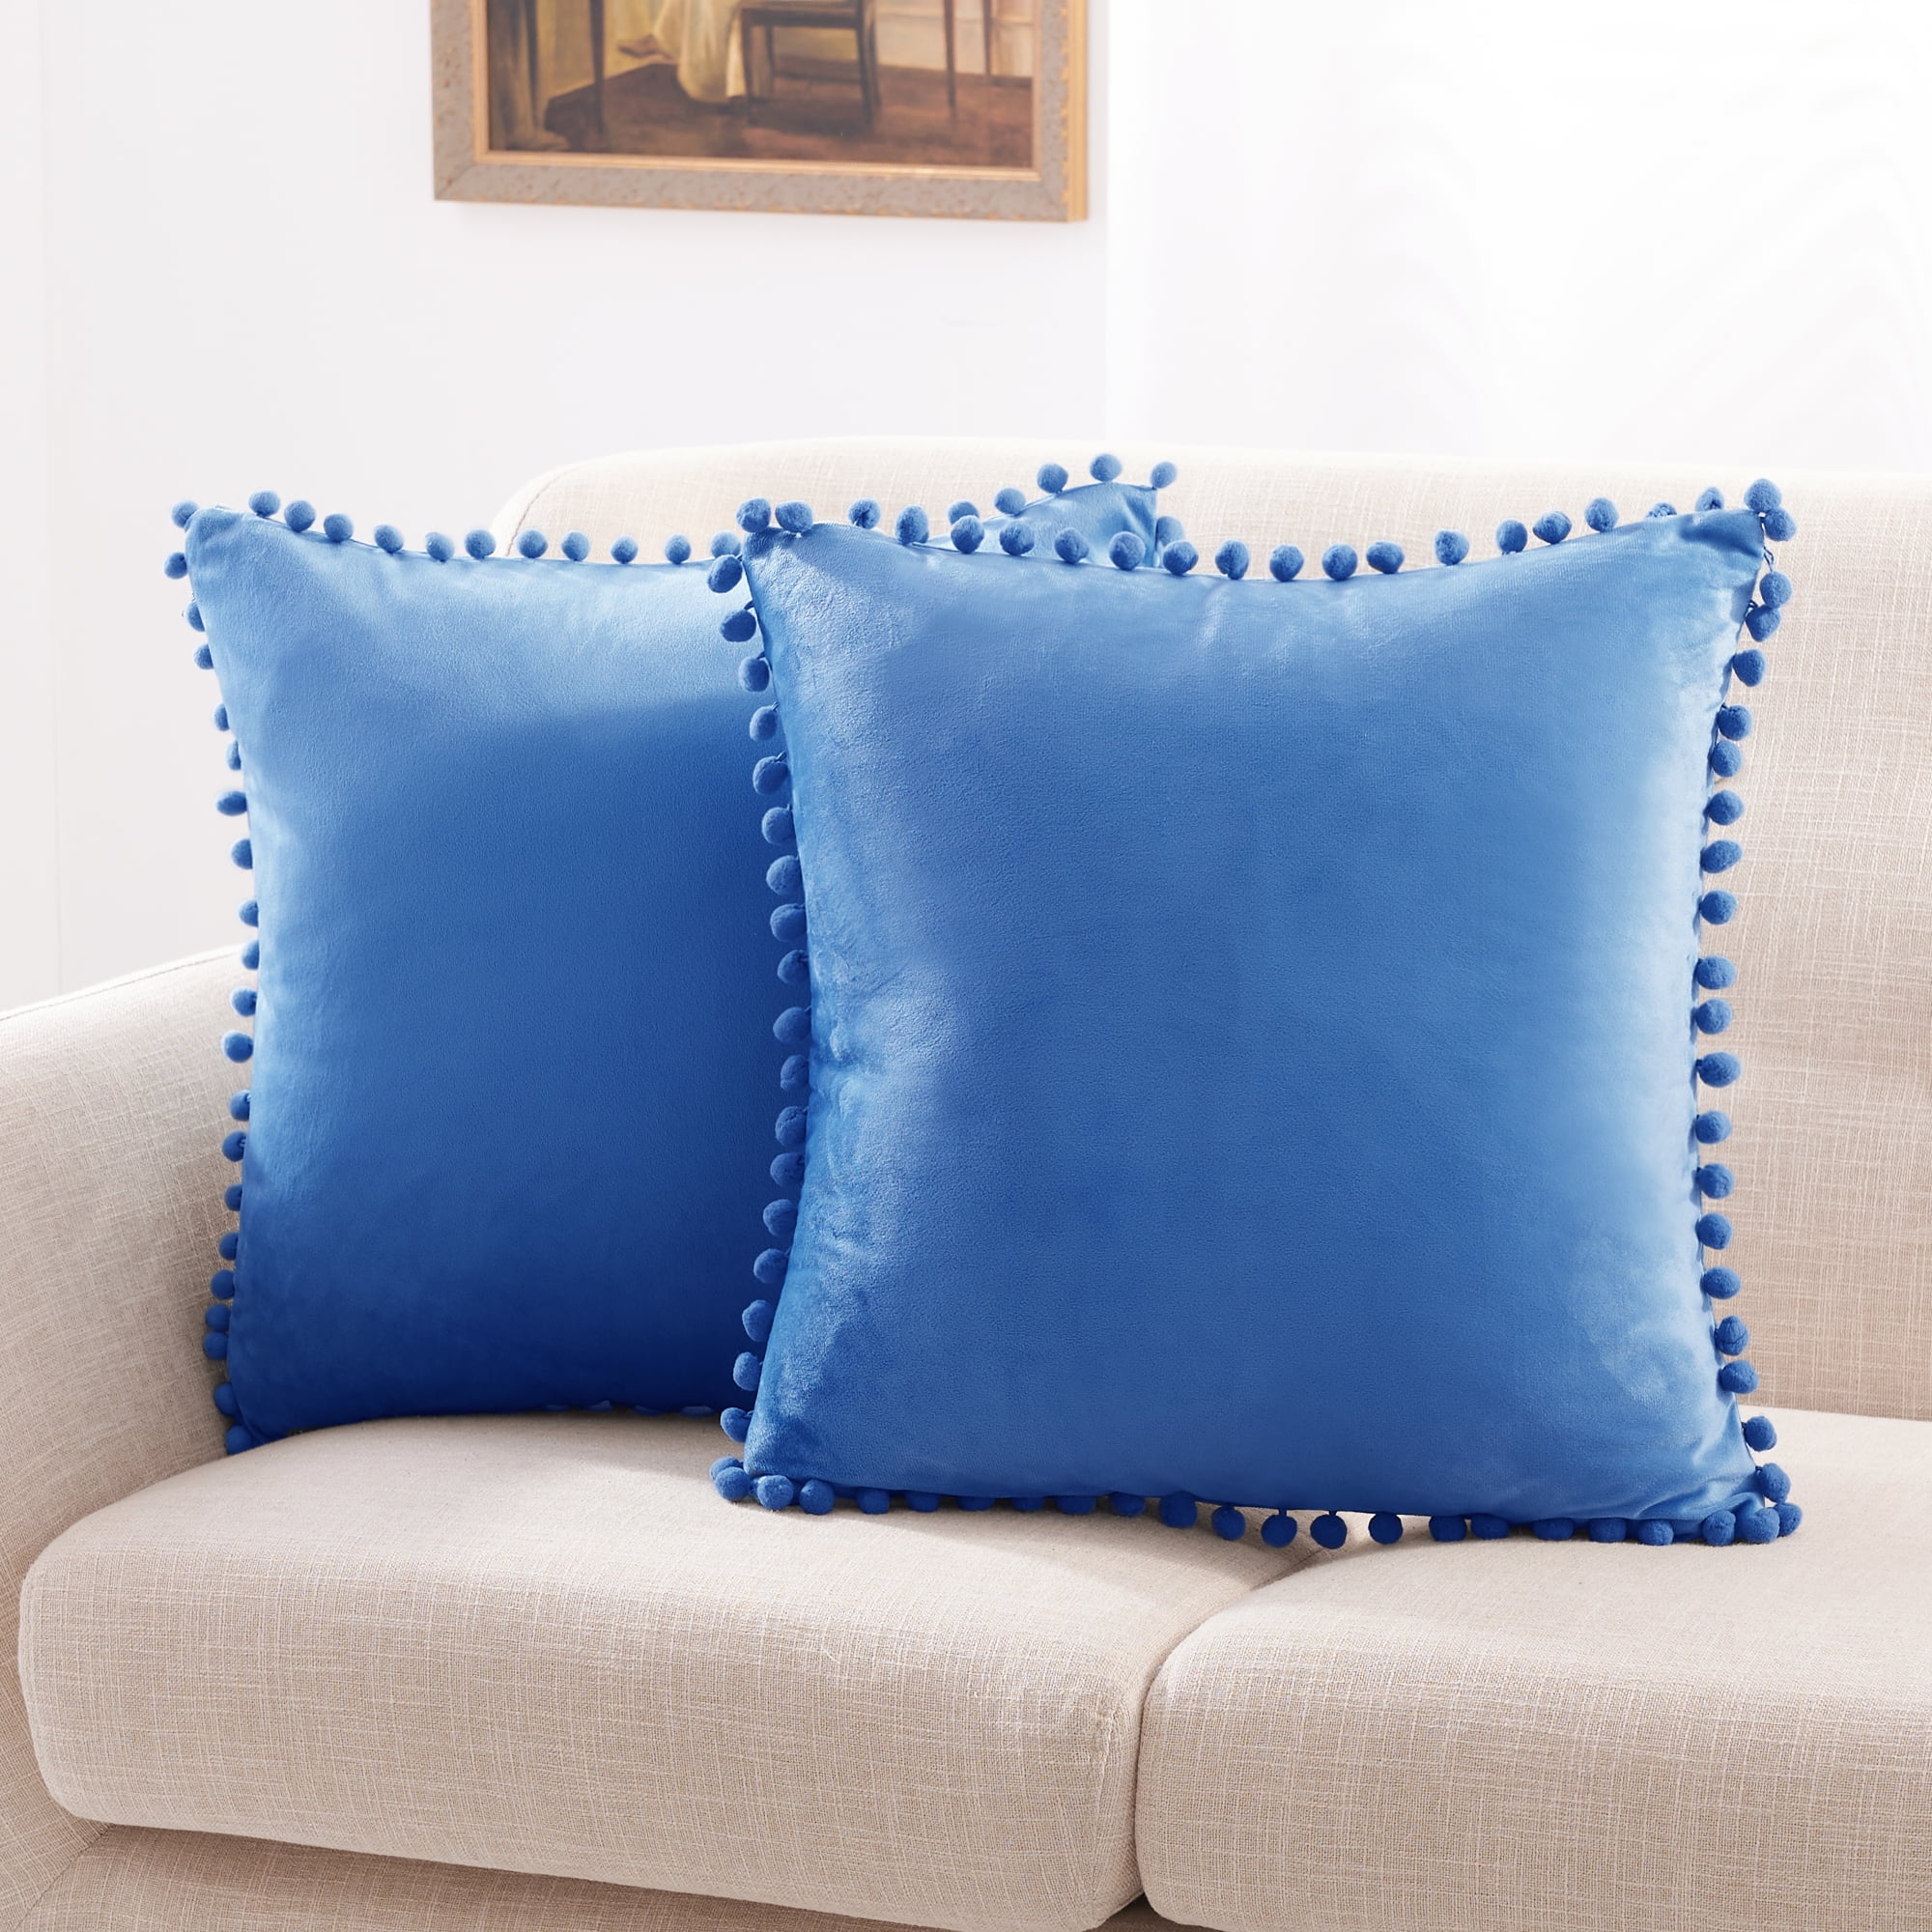 Deconovo Decorative Throw Pillow Covers 16x16 inch Velvet Pillow